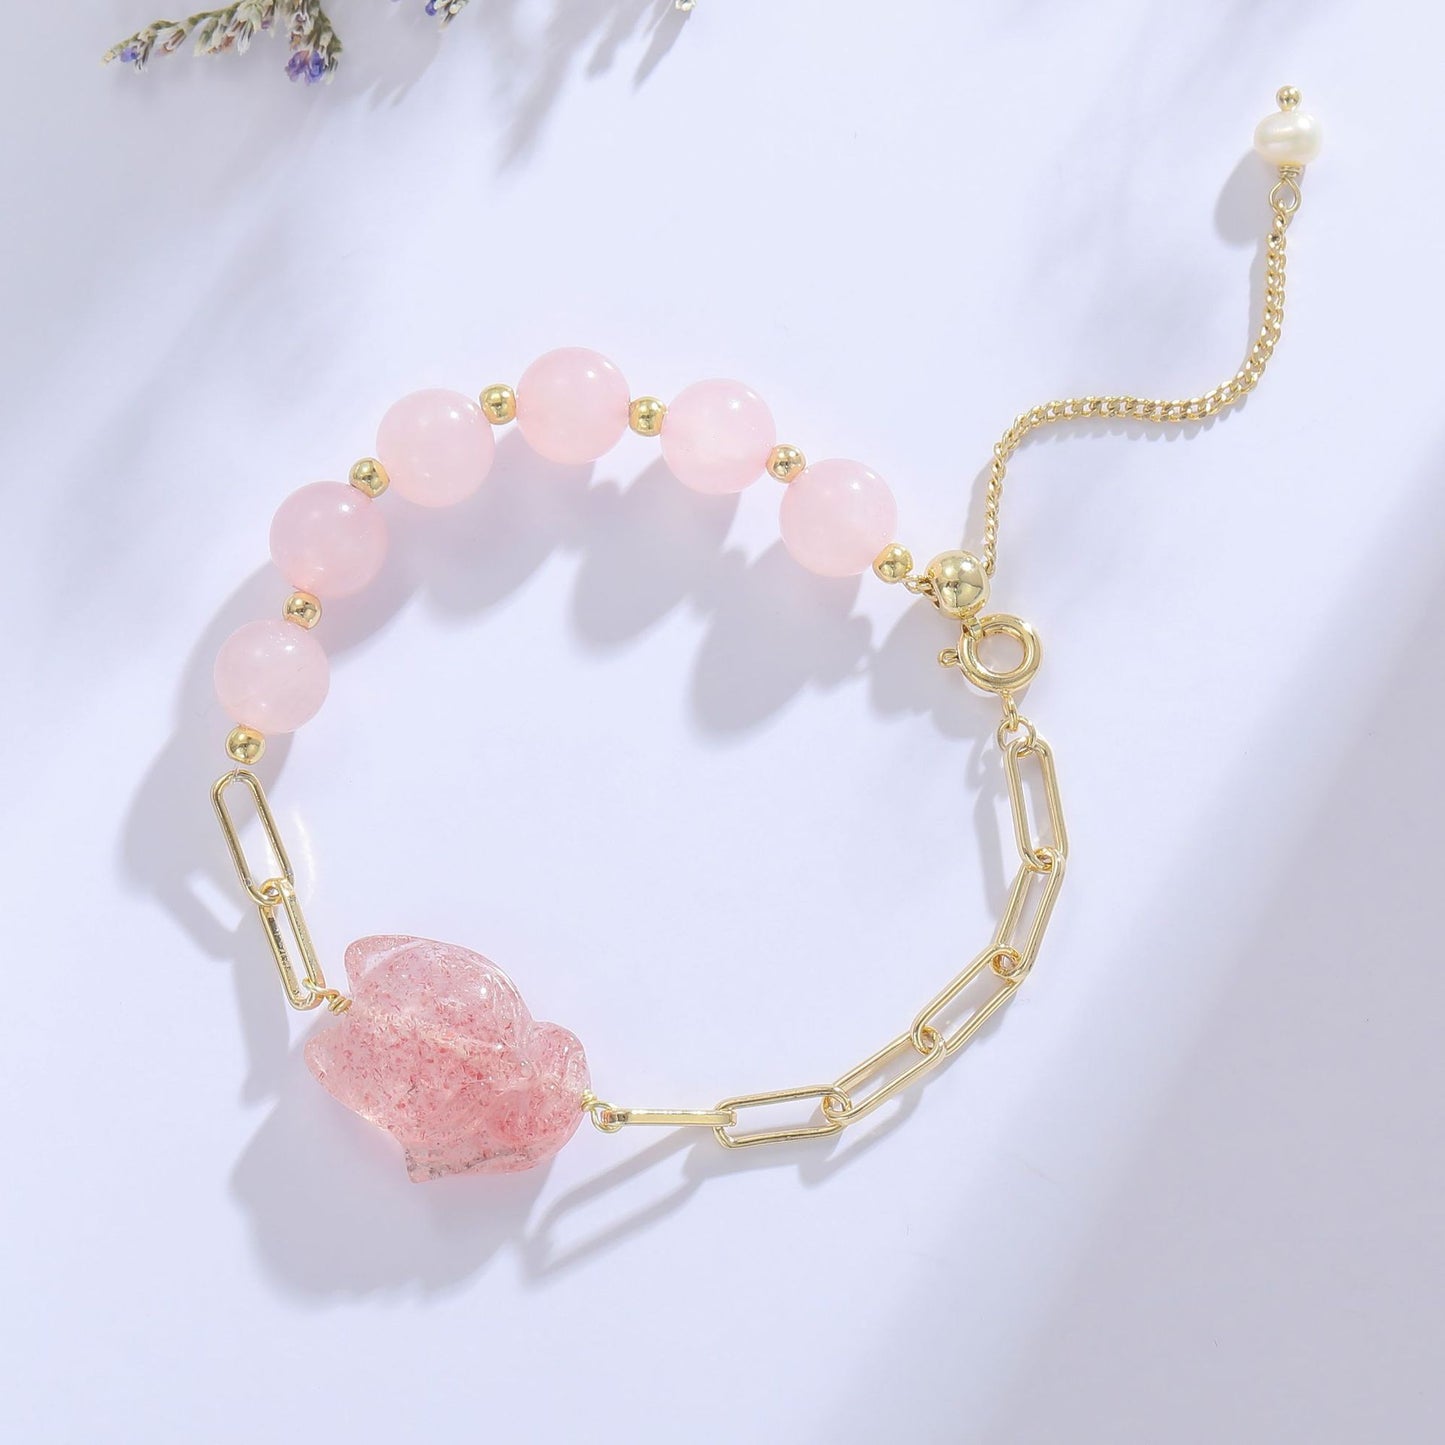 Peach Blossom Crystal Bracelet with Small Fox Design